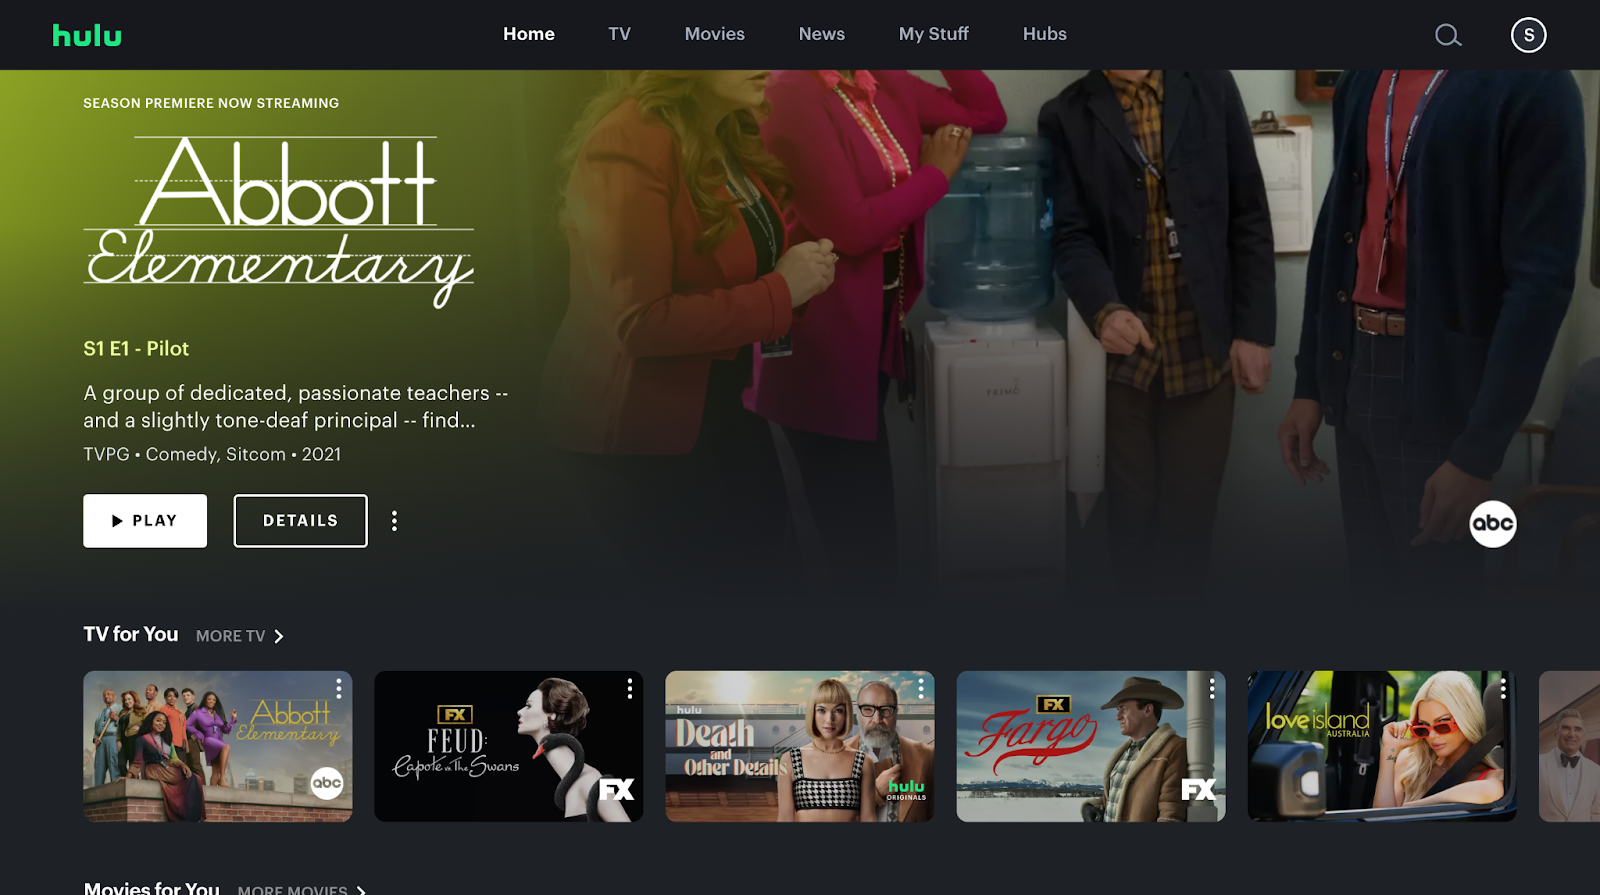 Hulu homepage featuring Abbott Elementary